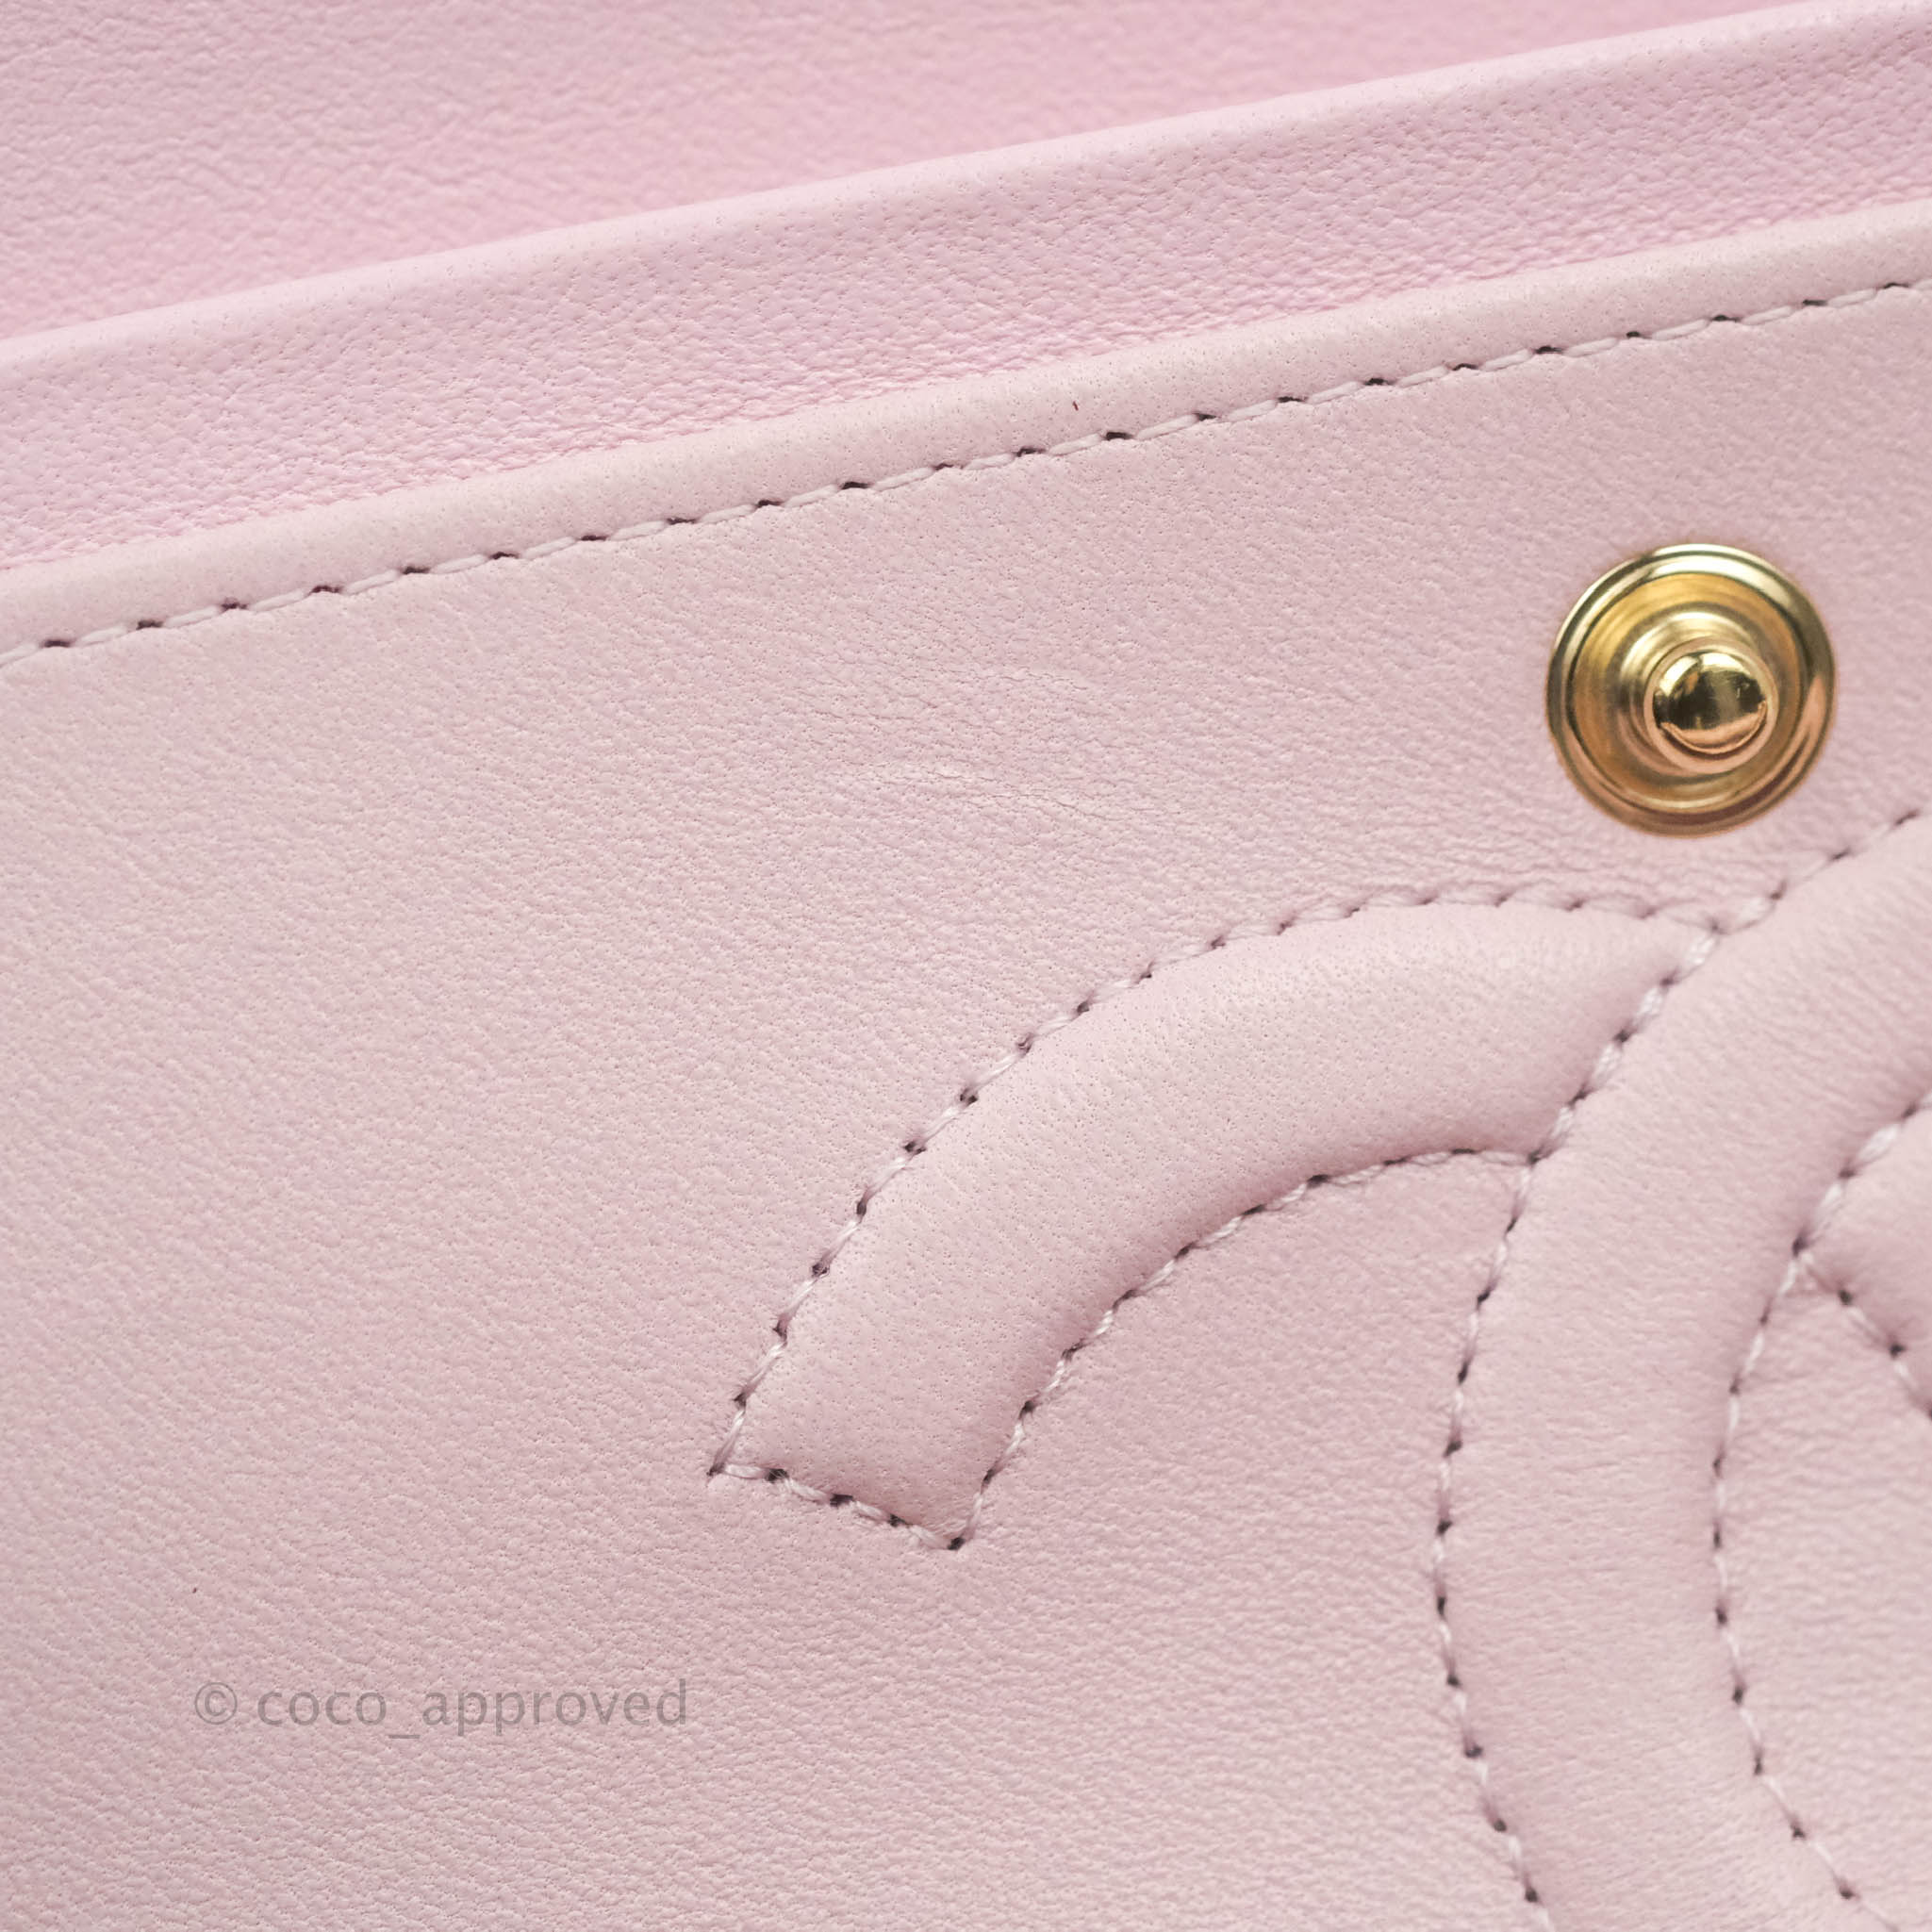 Chanel Pink Tweed Medium Classic Flap Bag GHW ASL3447